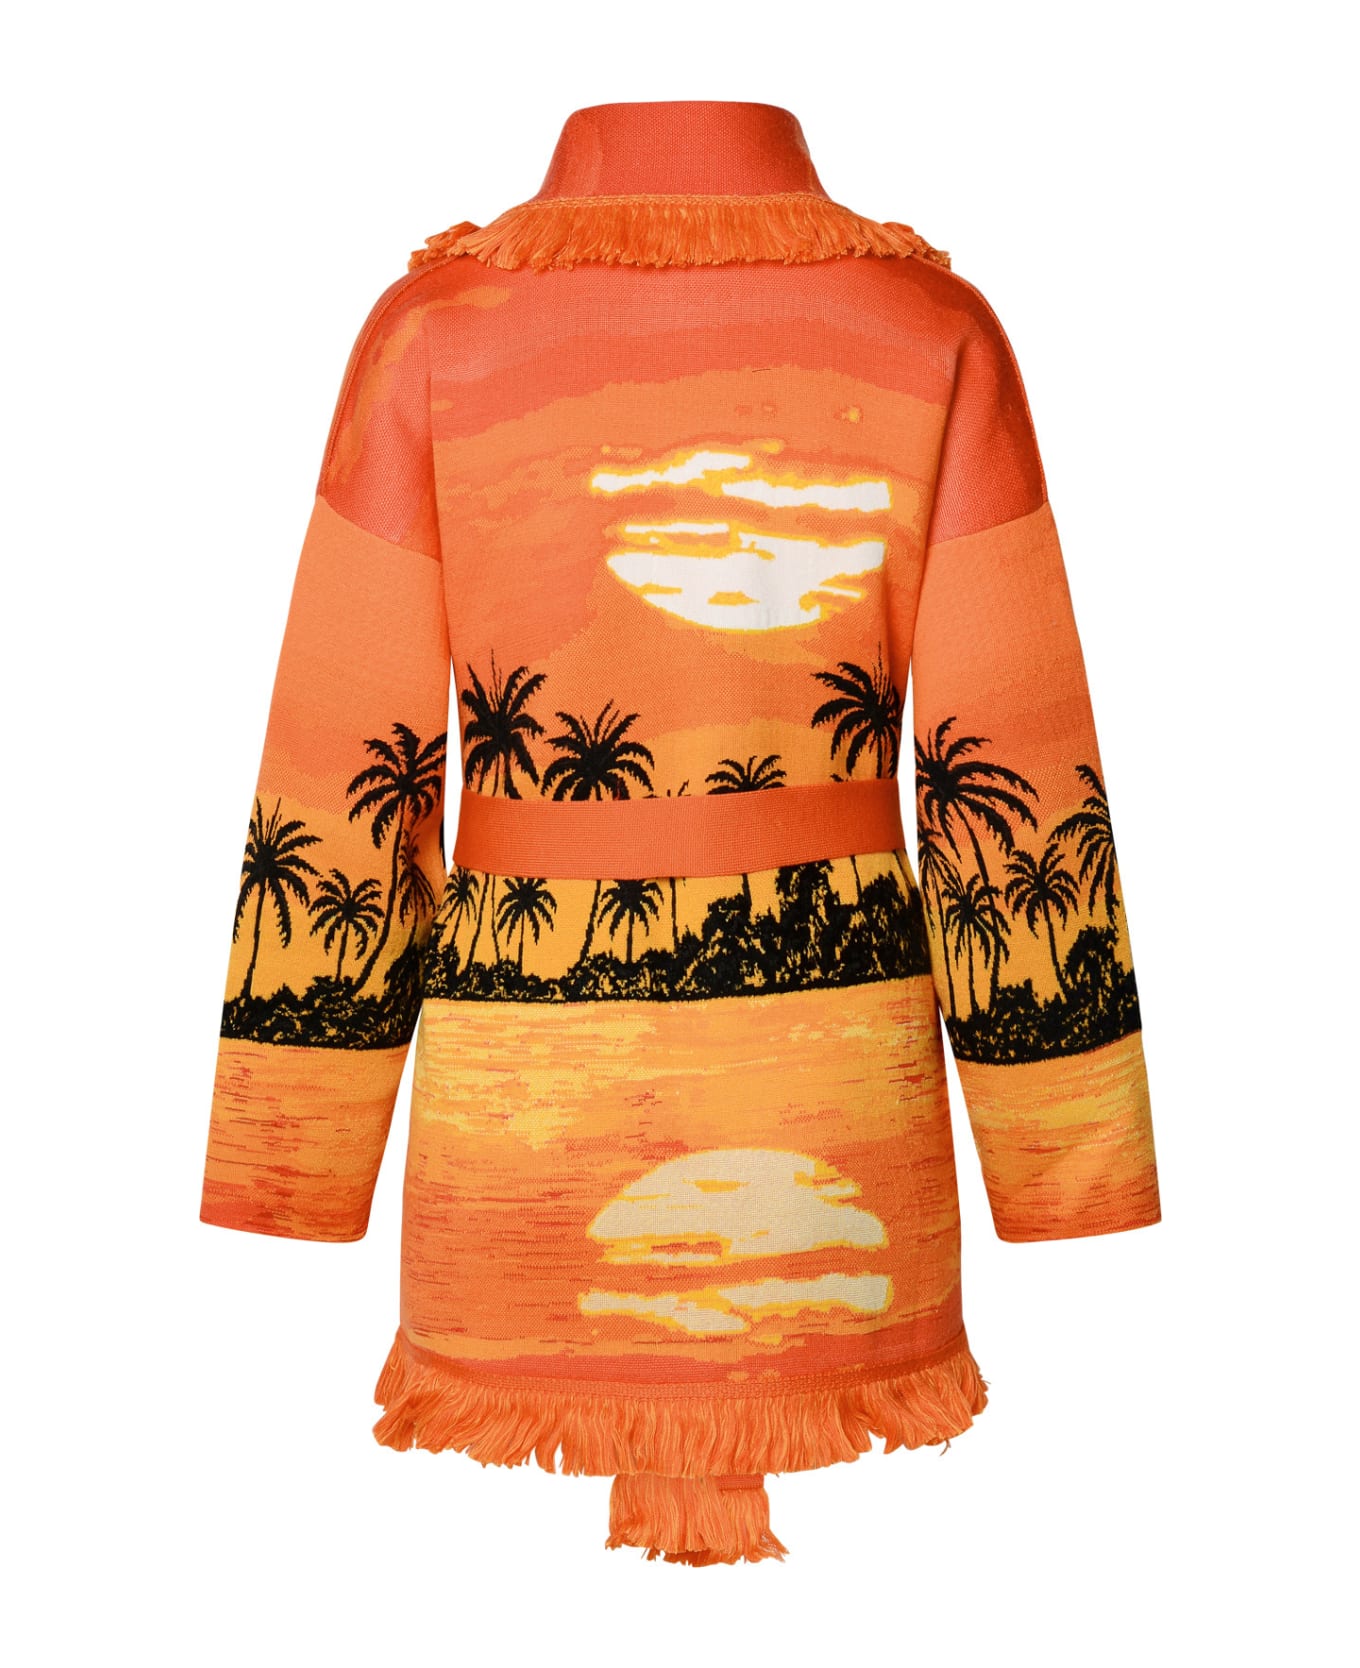 Alanui 'kerala Sunset' Orange Wool Blend Cardigan - Orange